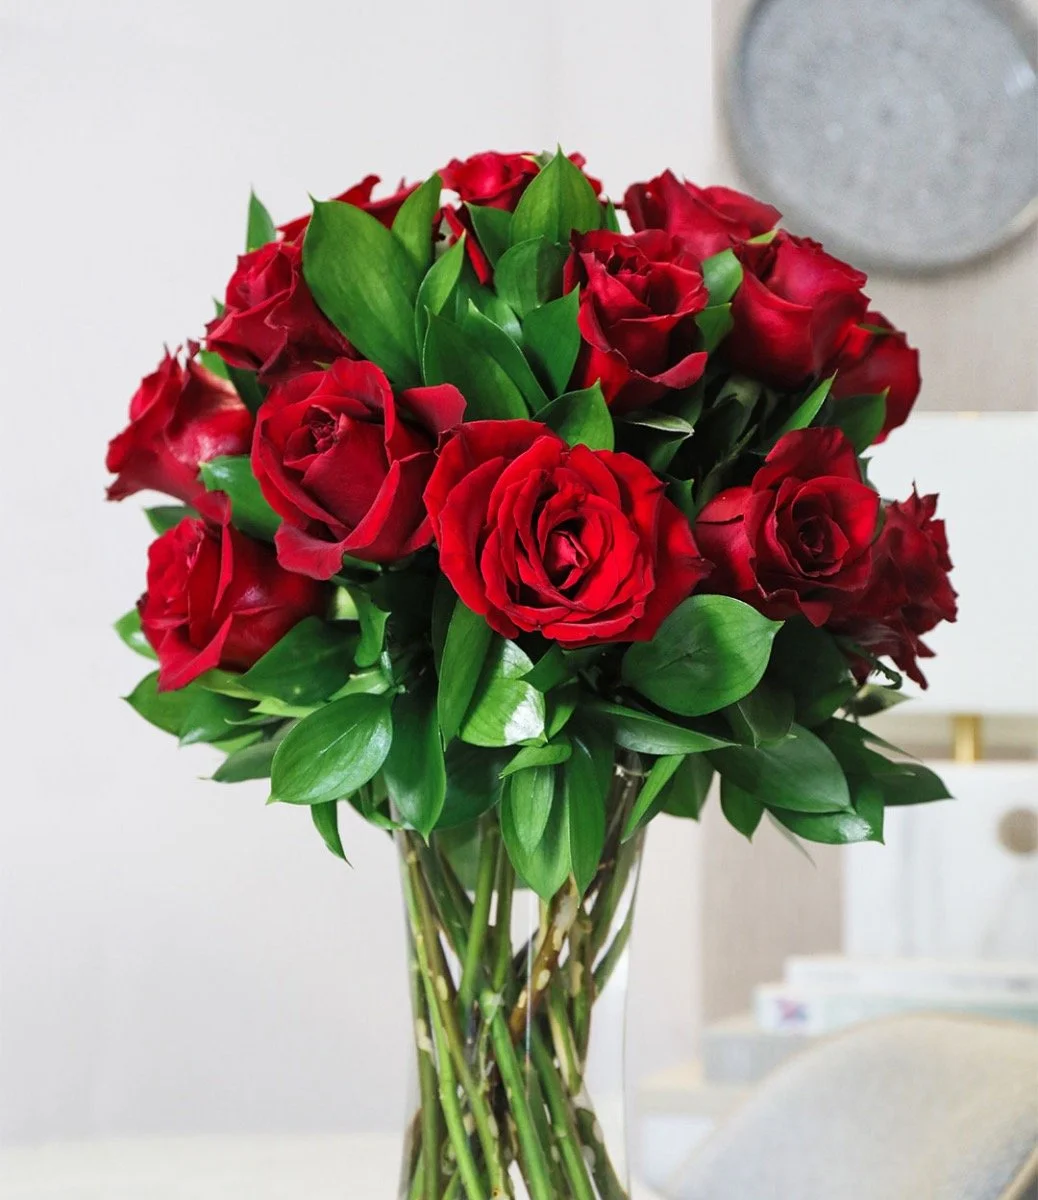 24 Roses in a Vase